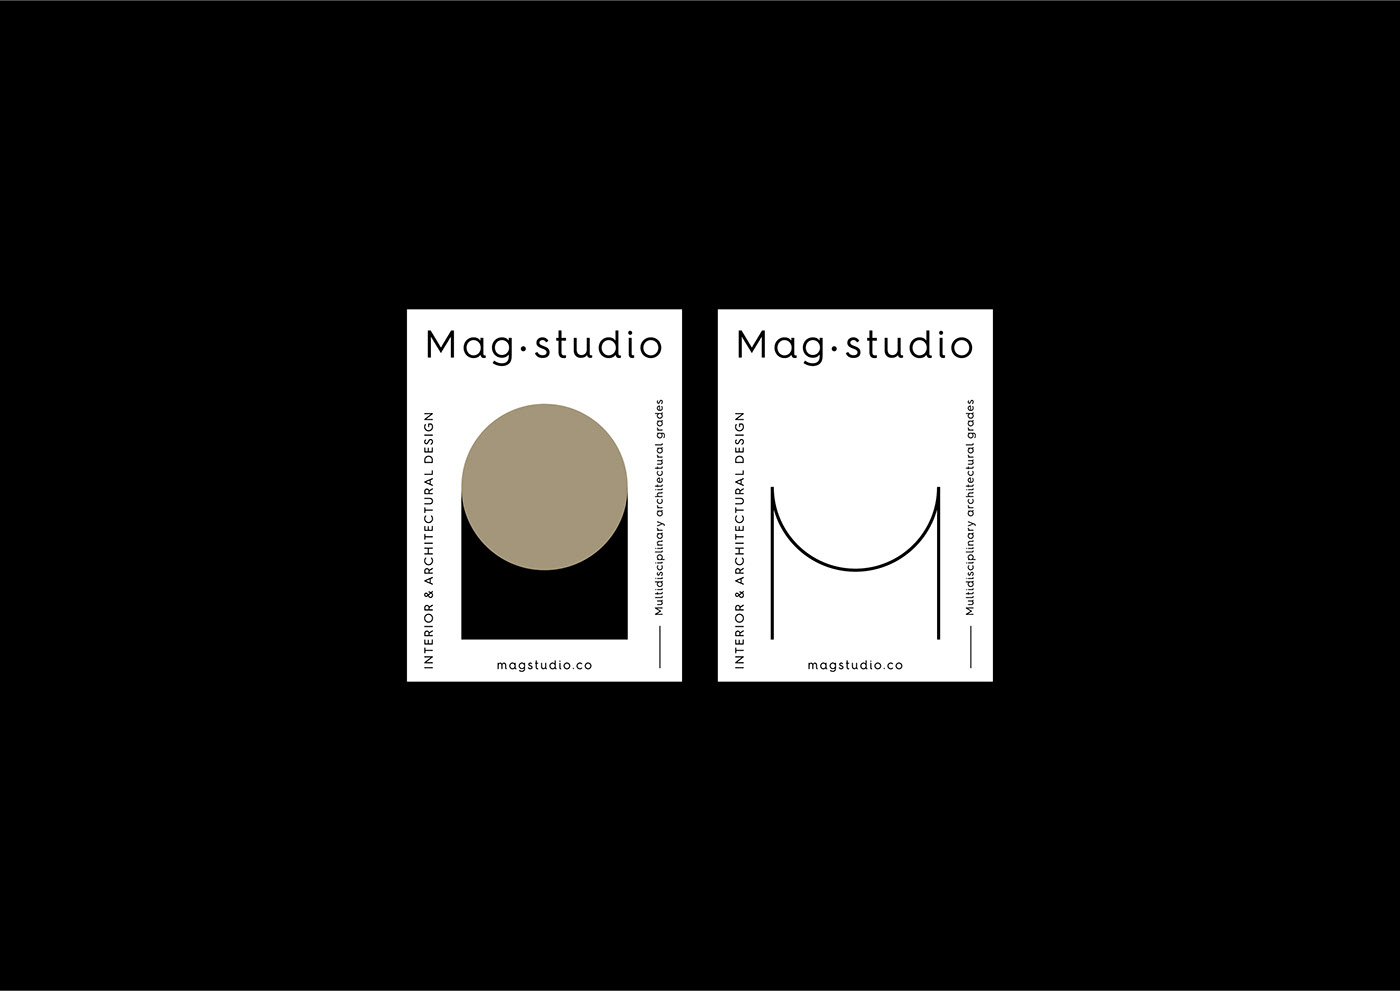 architectural practise architecture branding architecture emblem logomark mag studio minimal design Packaging Poster Design product design  Prop Styling